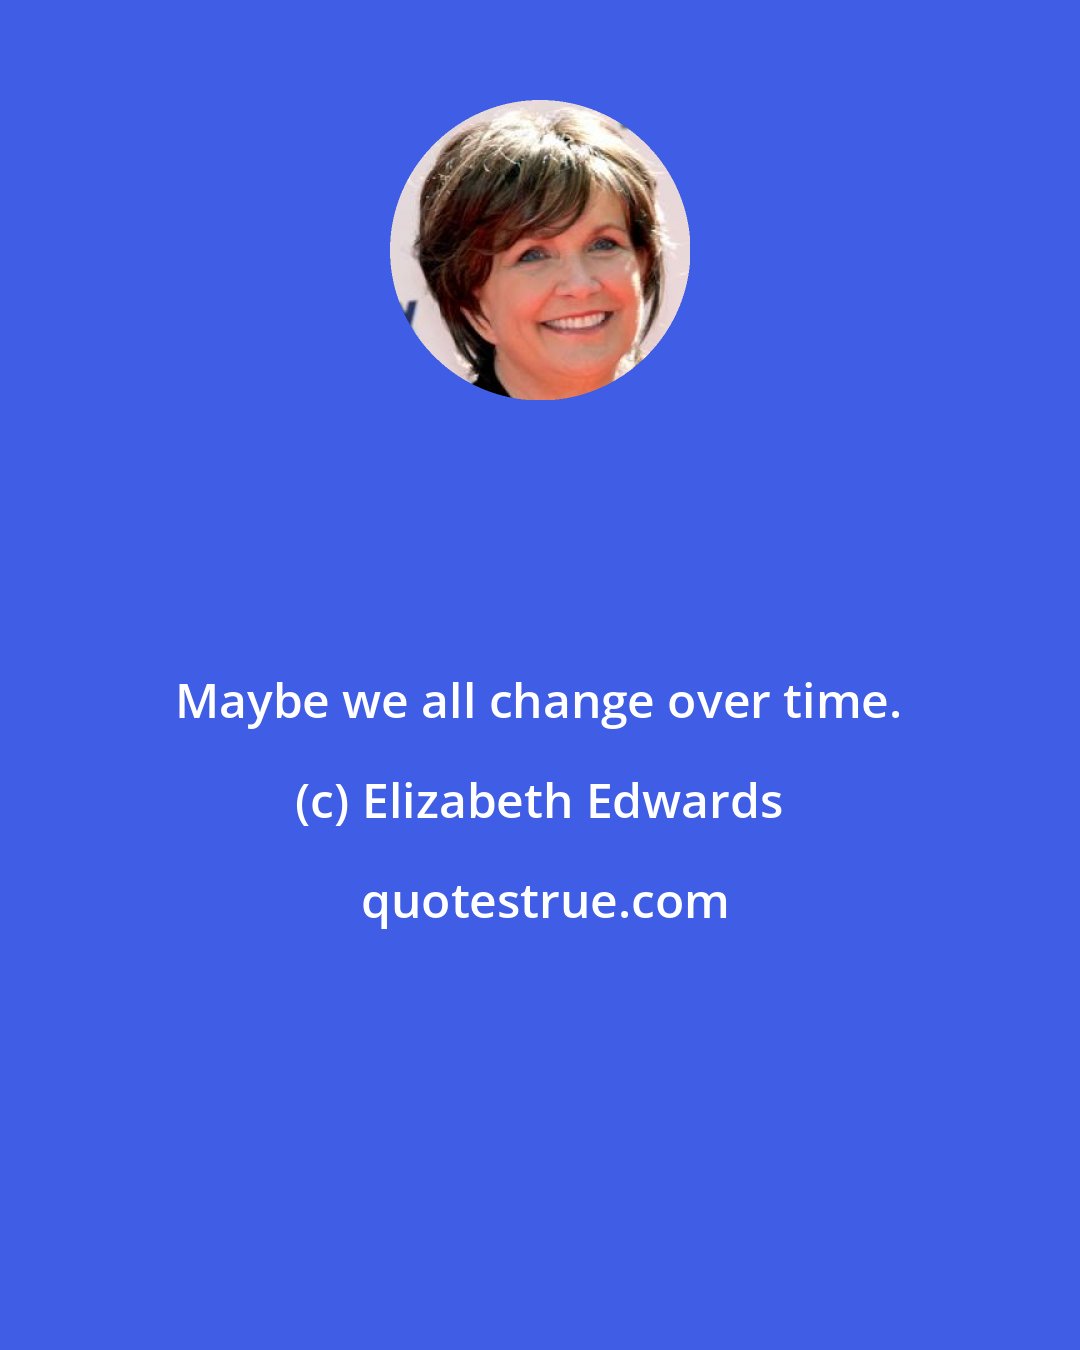 Elizabeth Edwards: Maybe we all change over time.